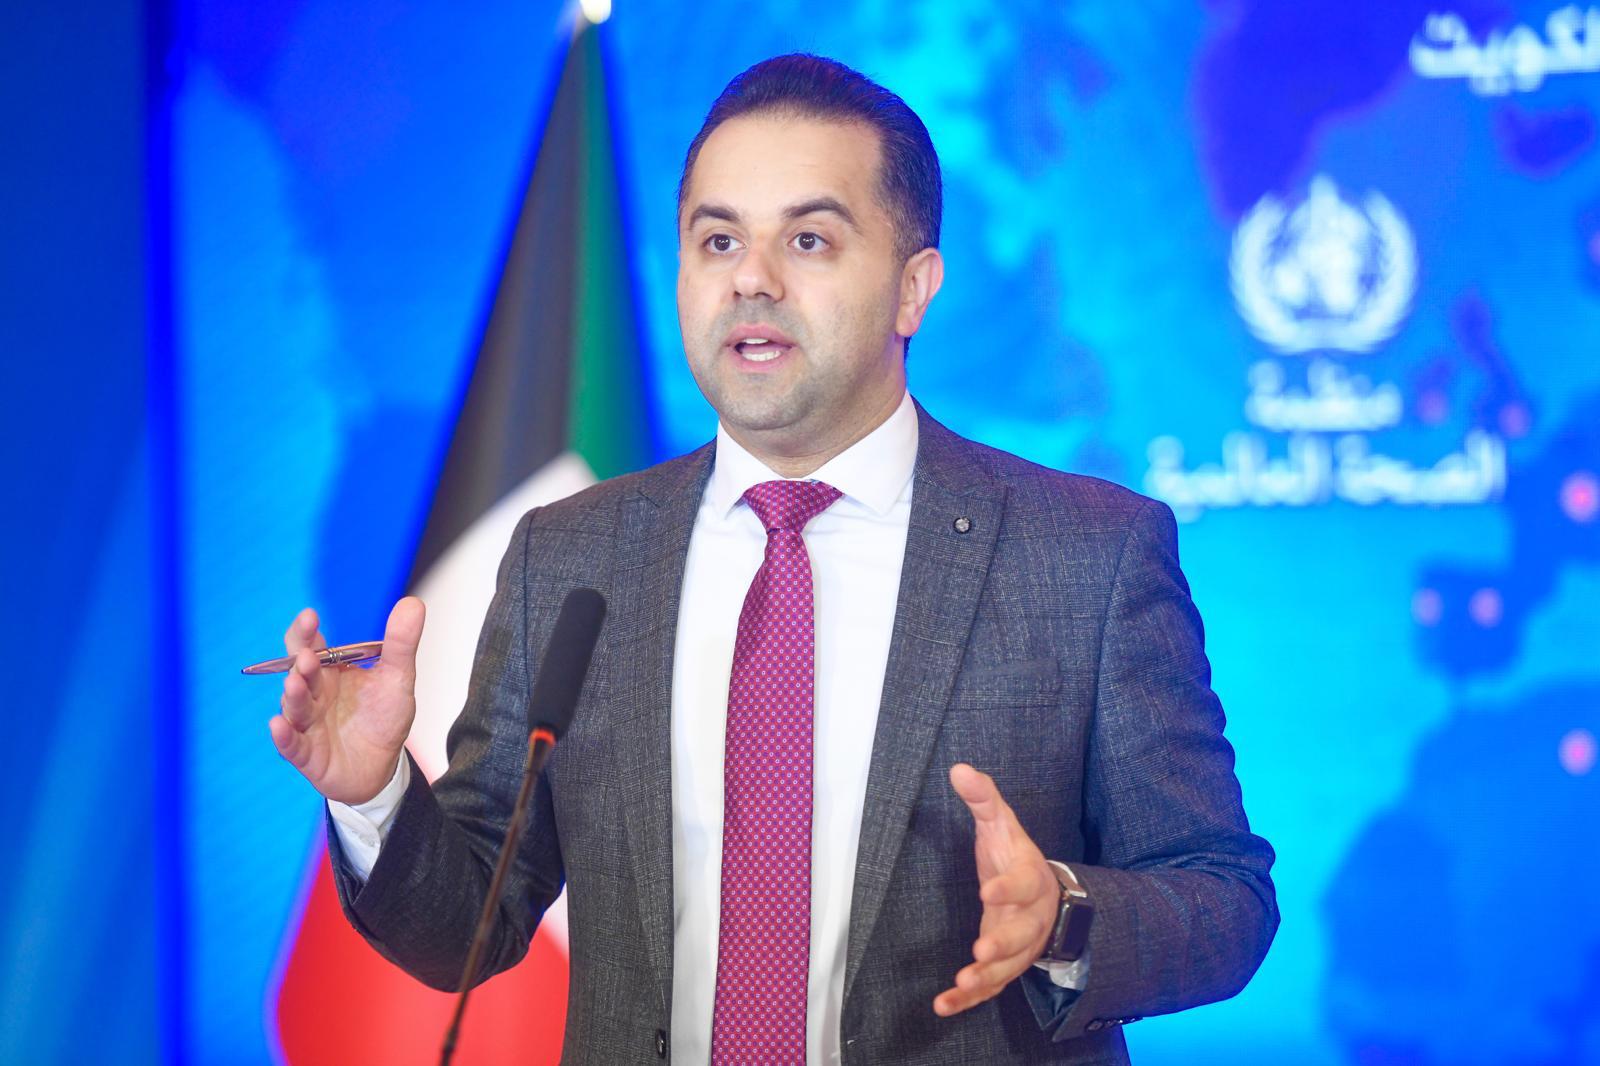 Ministry's Spokesman Dr. Abdullah Al-Sanad